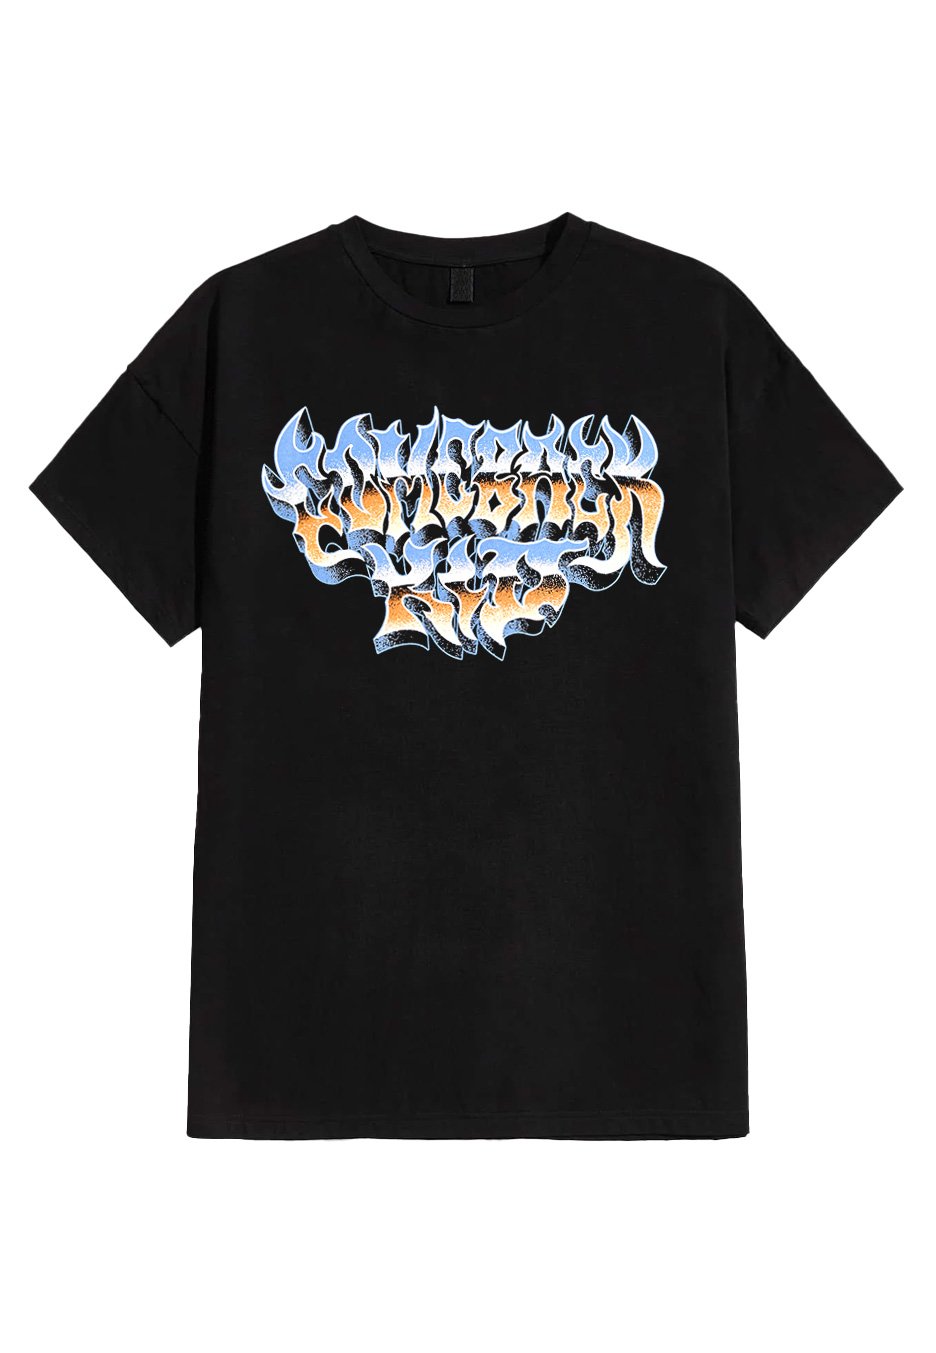 Comeback Kid - Glass Metal - T-Shirt